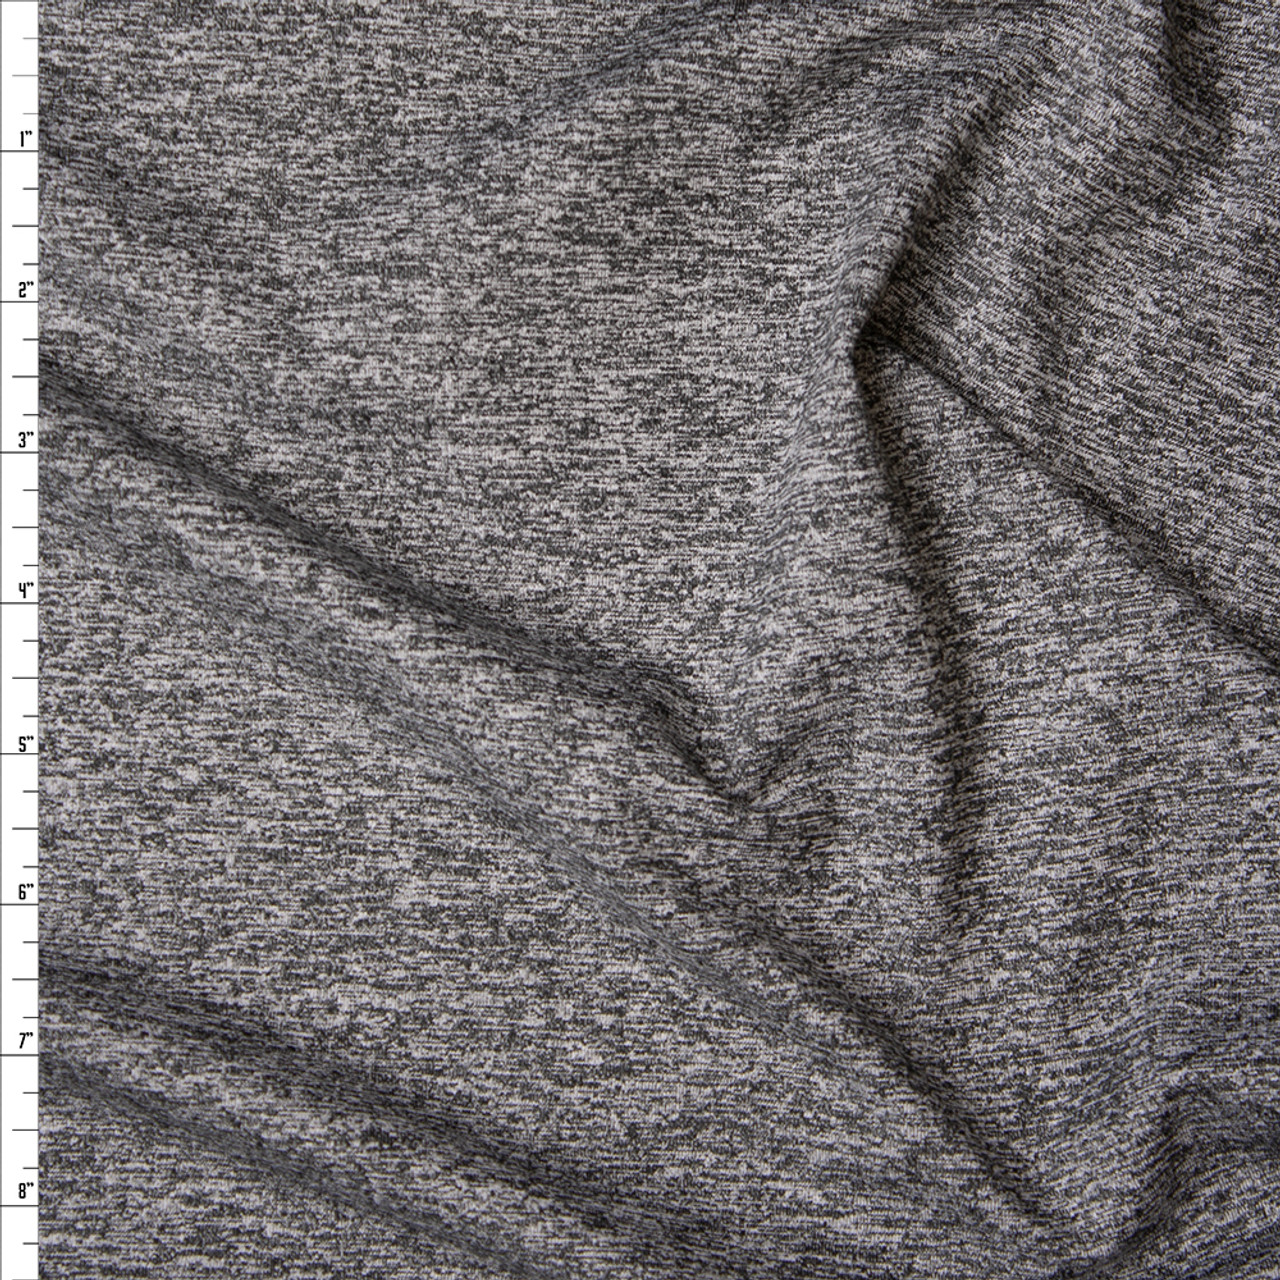 Cali Fabrics Heather Grey Midweight 4-way Stretch Rayon/Spandex Jersey Knit  Fabric by the Yard